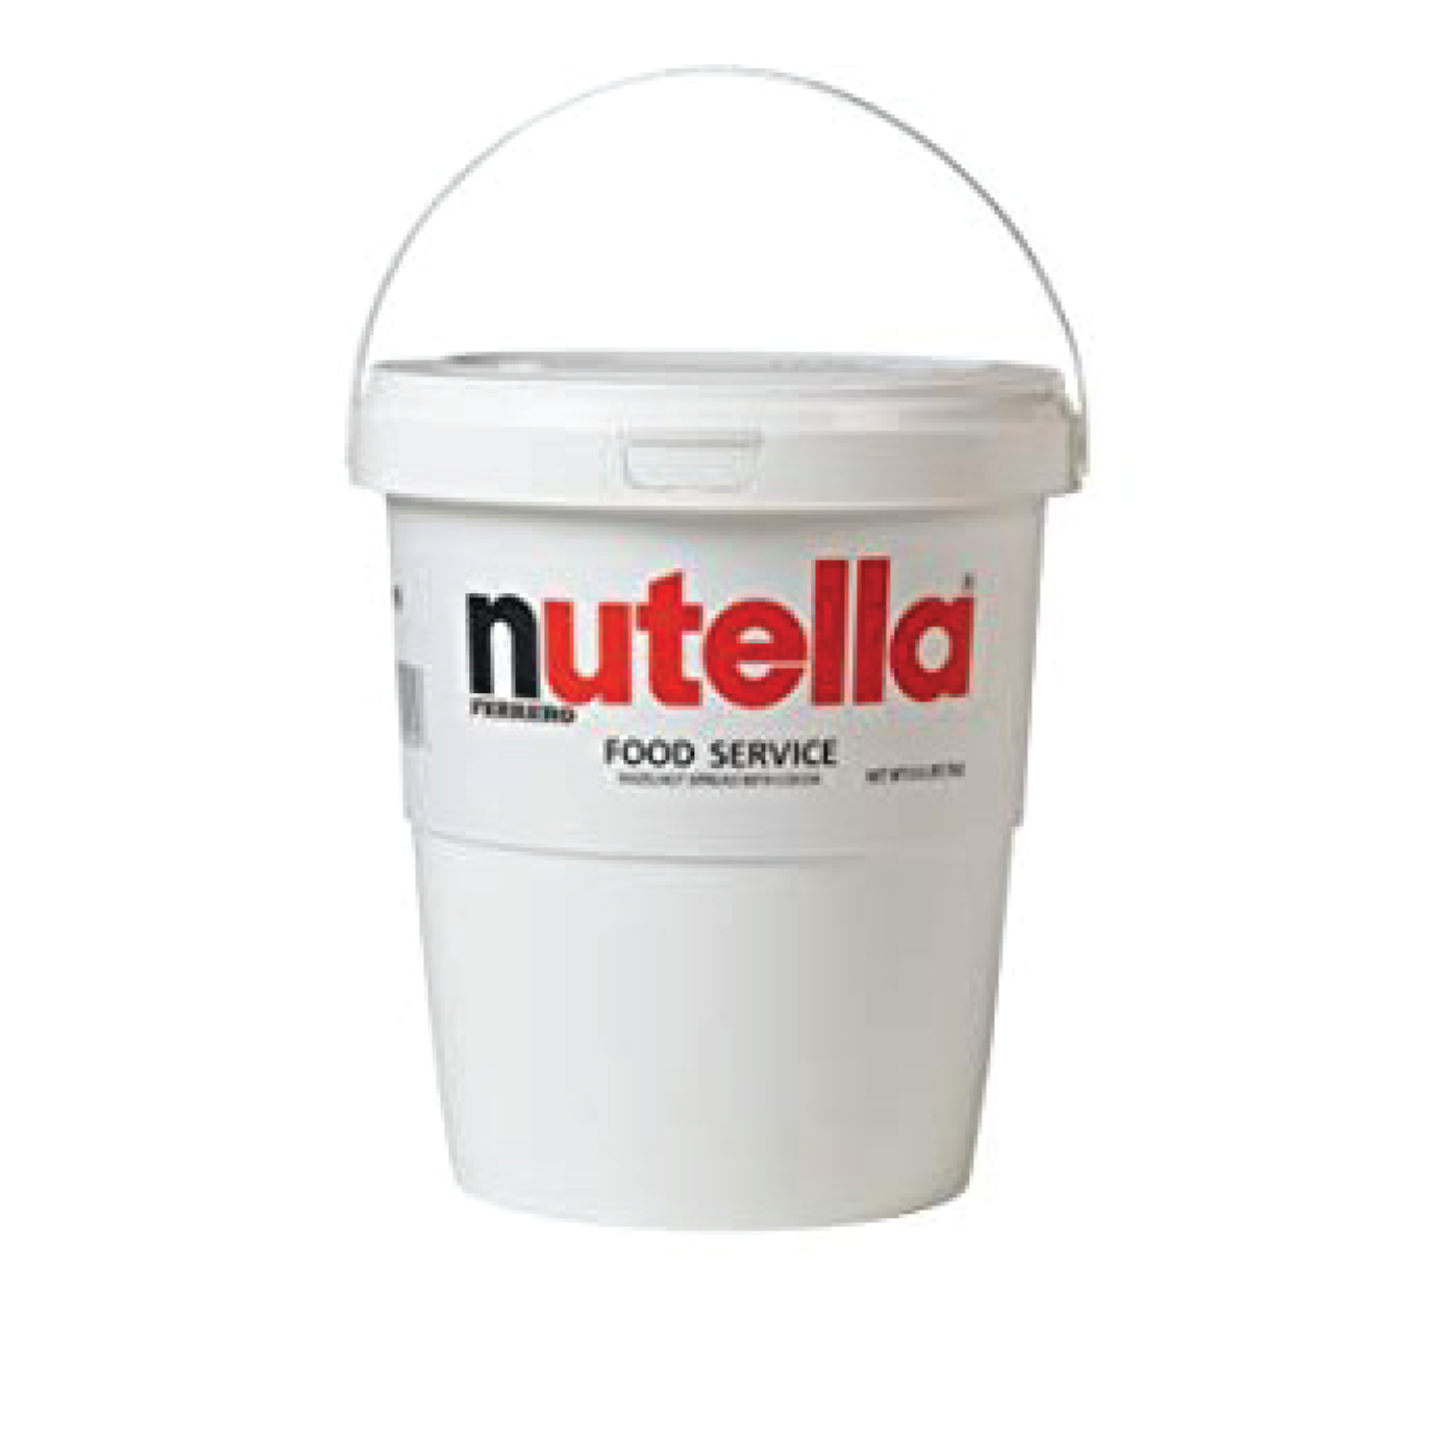 Nutella Hazelnut Spread. Nutella Hazelnut Food Service Size 6.6 lbs Tub